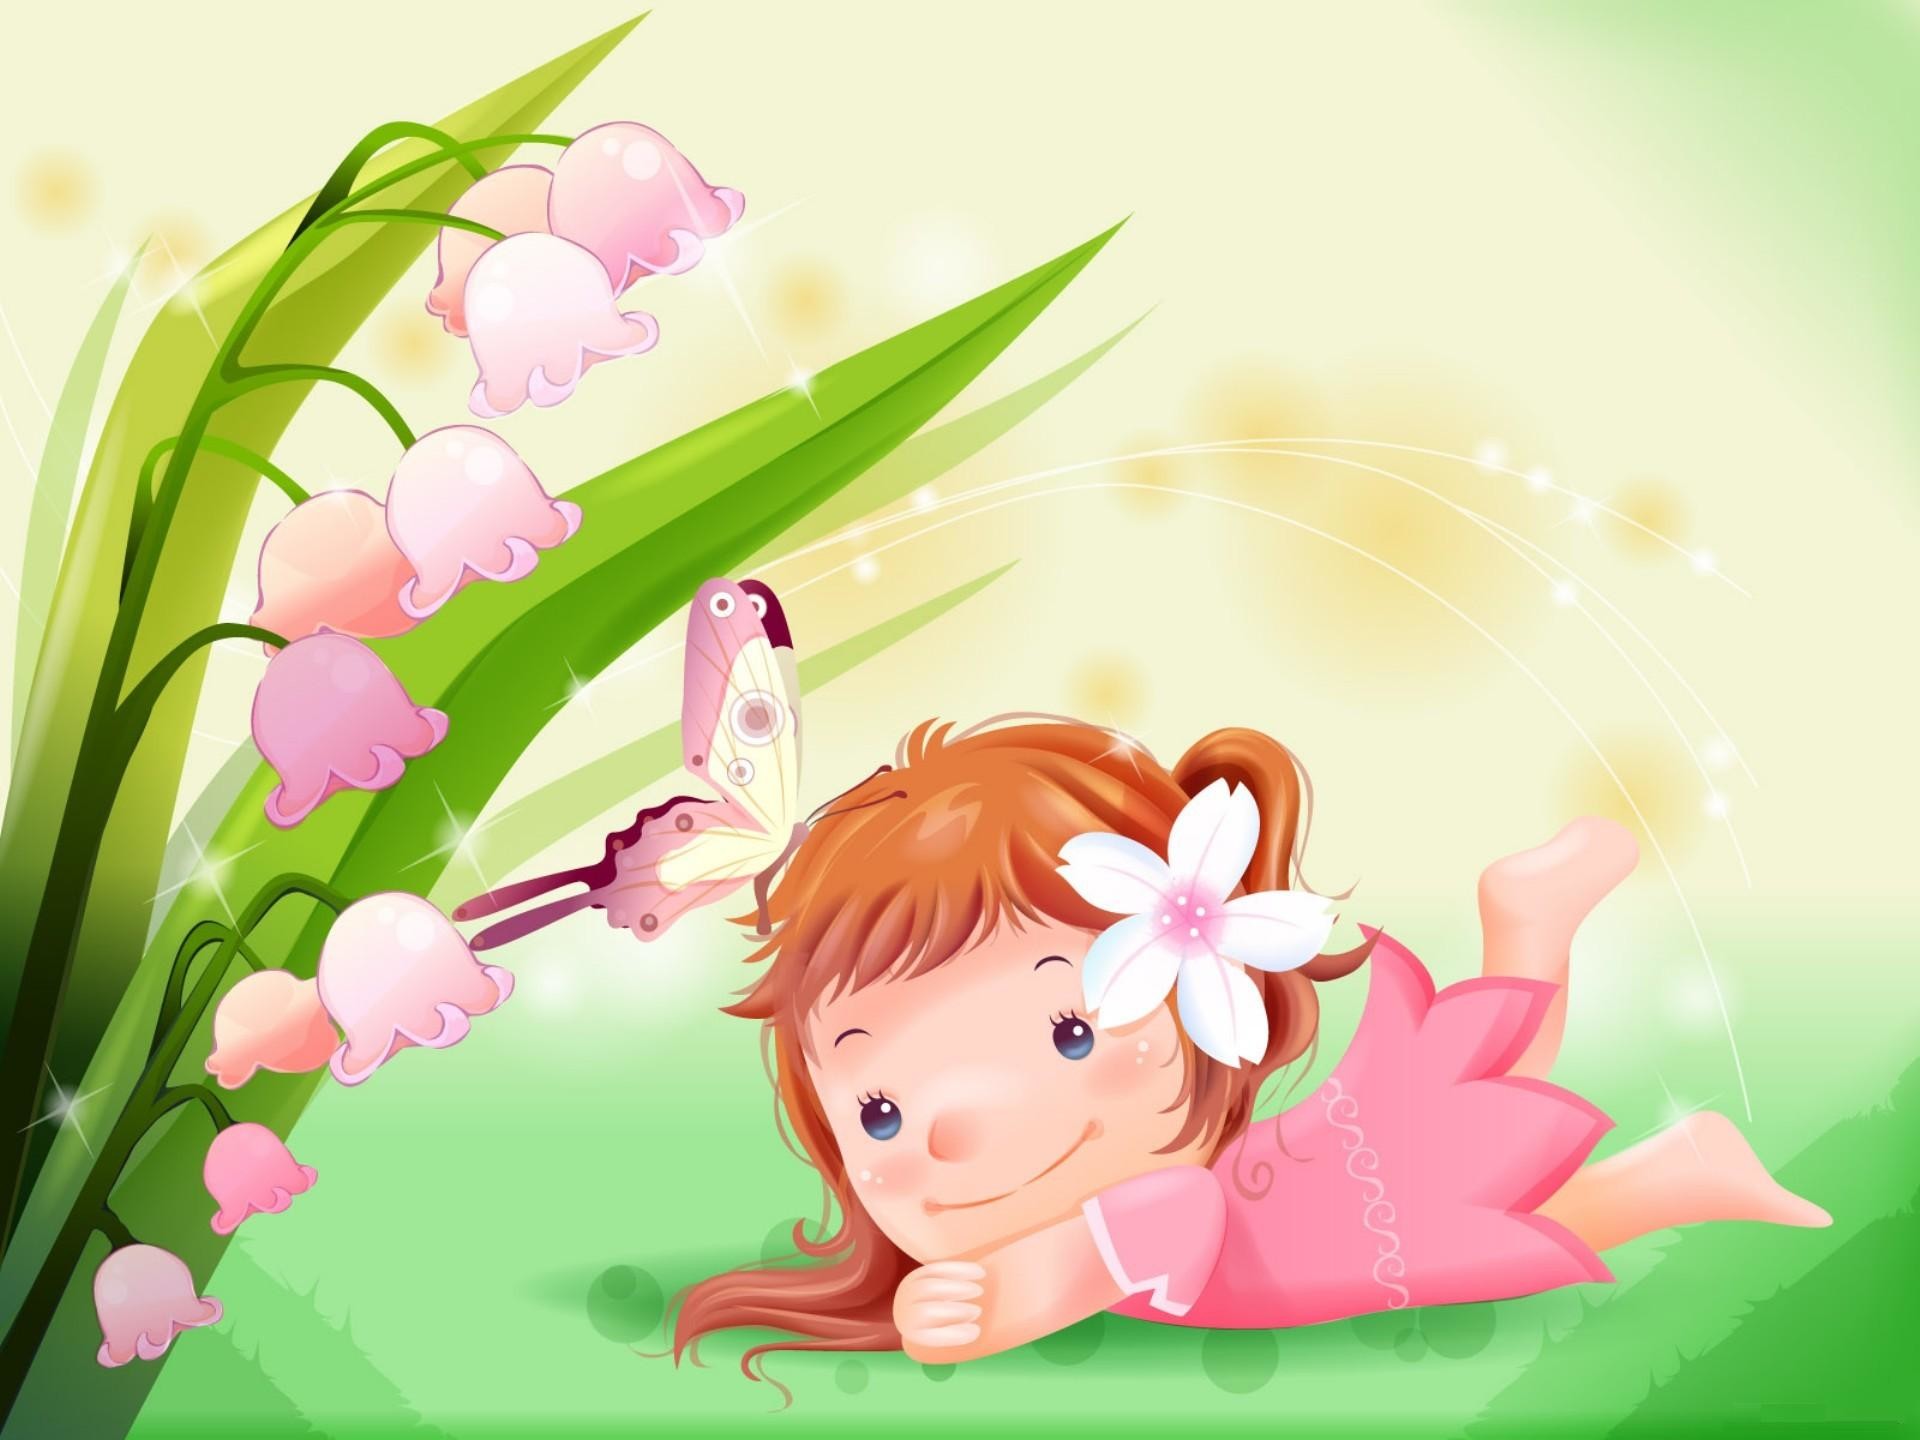 Cute Cartoon Girl with Flower HD Wallpaper Desktop Backgrounds Free